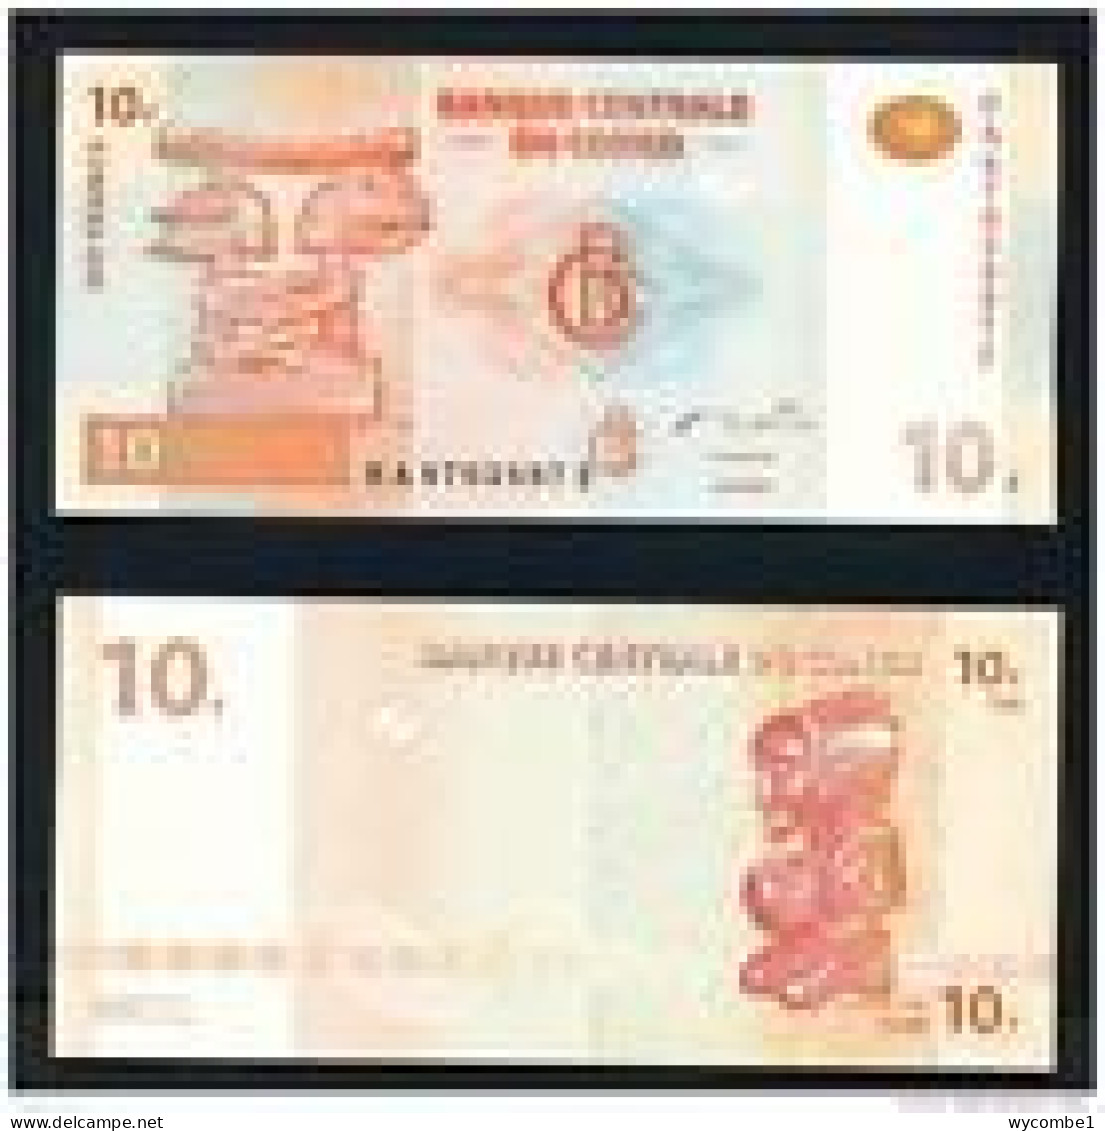 CONGO DR  -  2003 10 Francs UNC  Banknote - Democratic Republic Of The Congo & Zaire